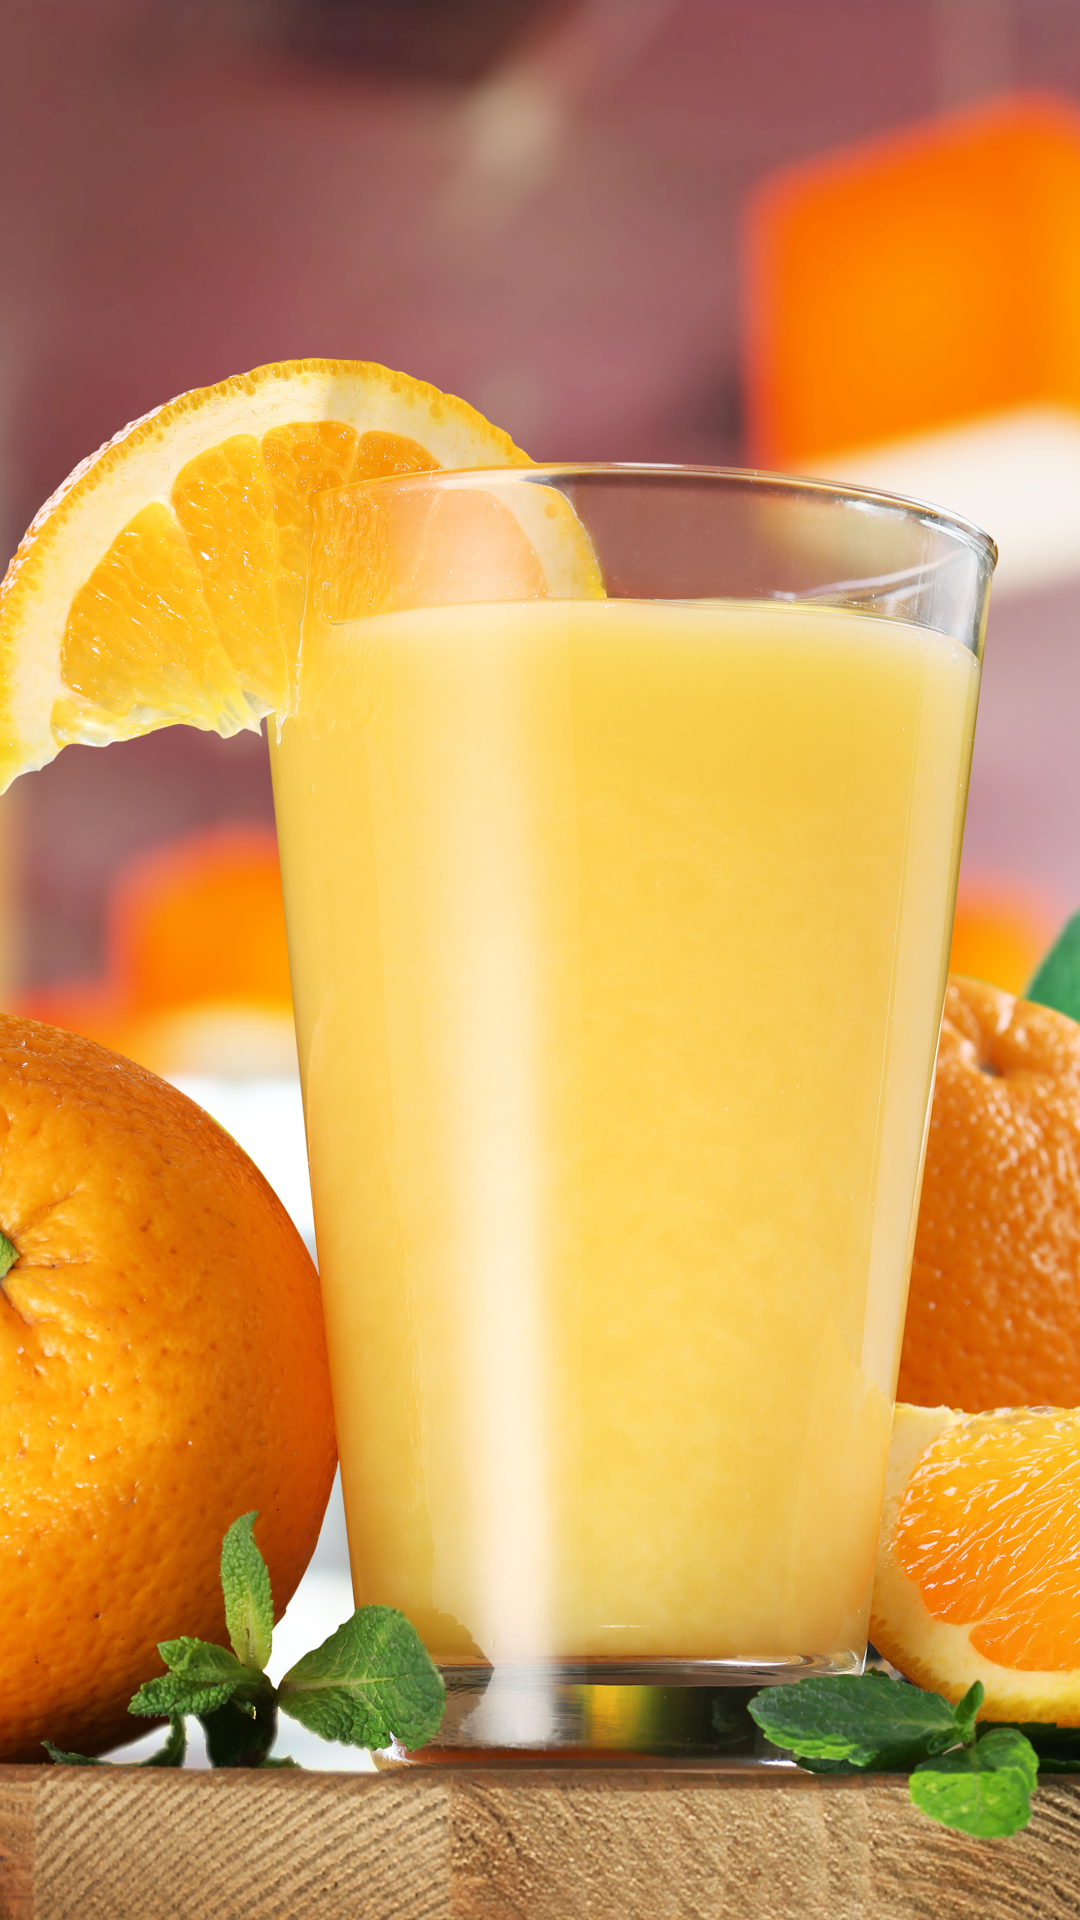 4K, FHD, UHD orange (fruit), glass, juice